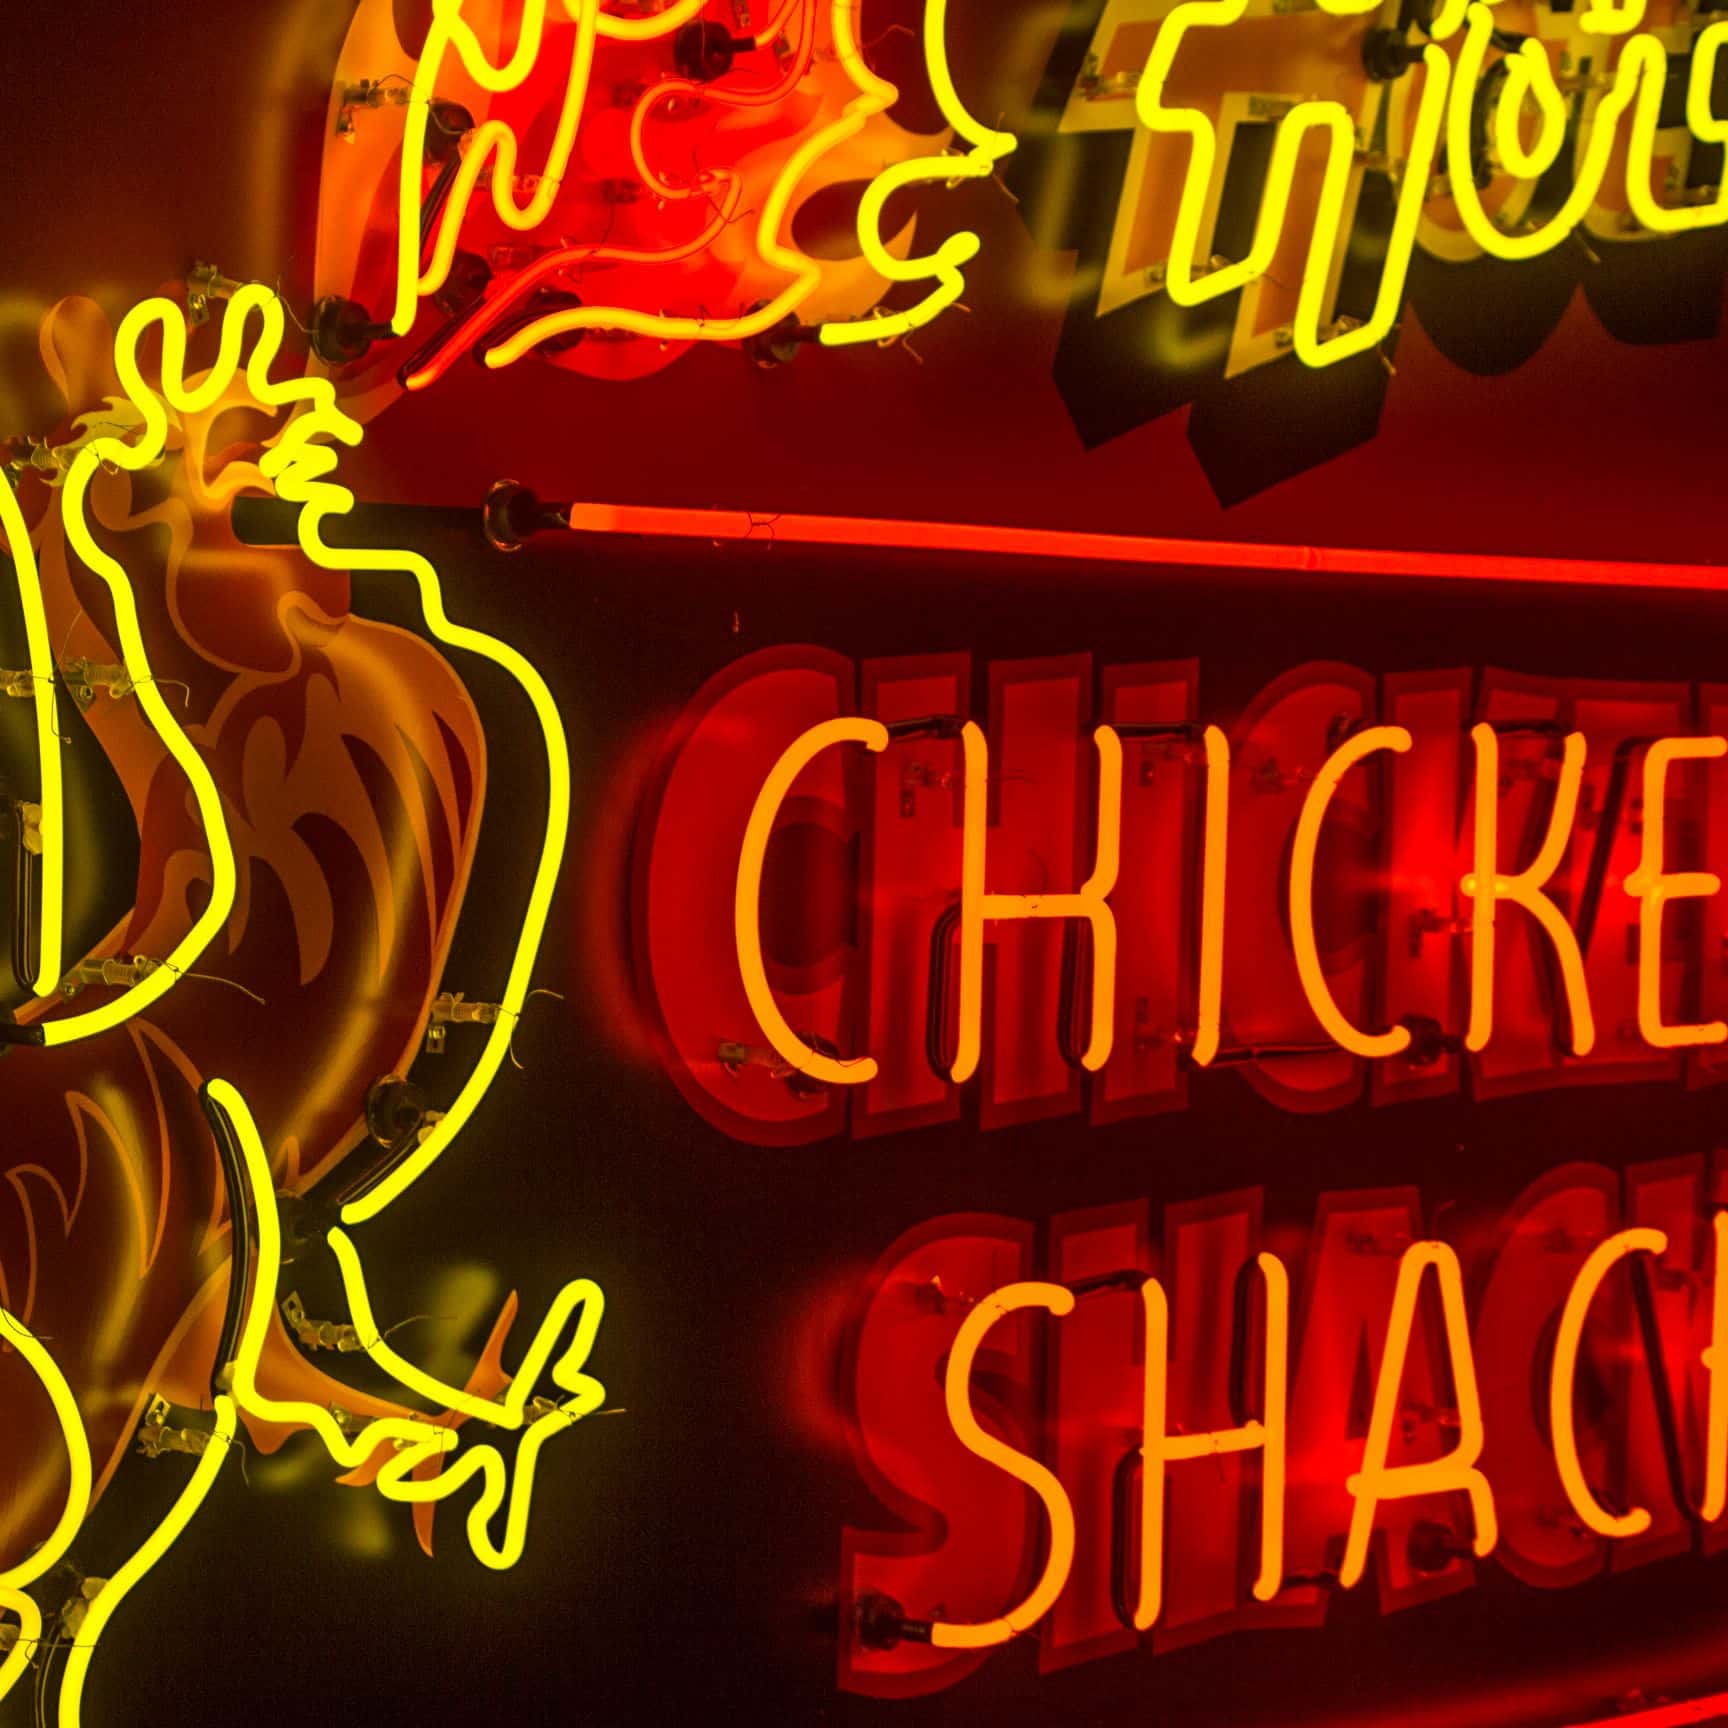 Rockys Hot Chicekn Shack Neon Sign